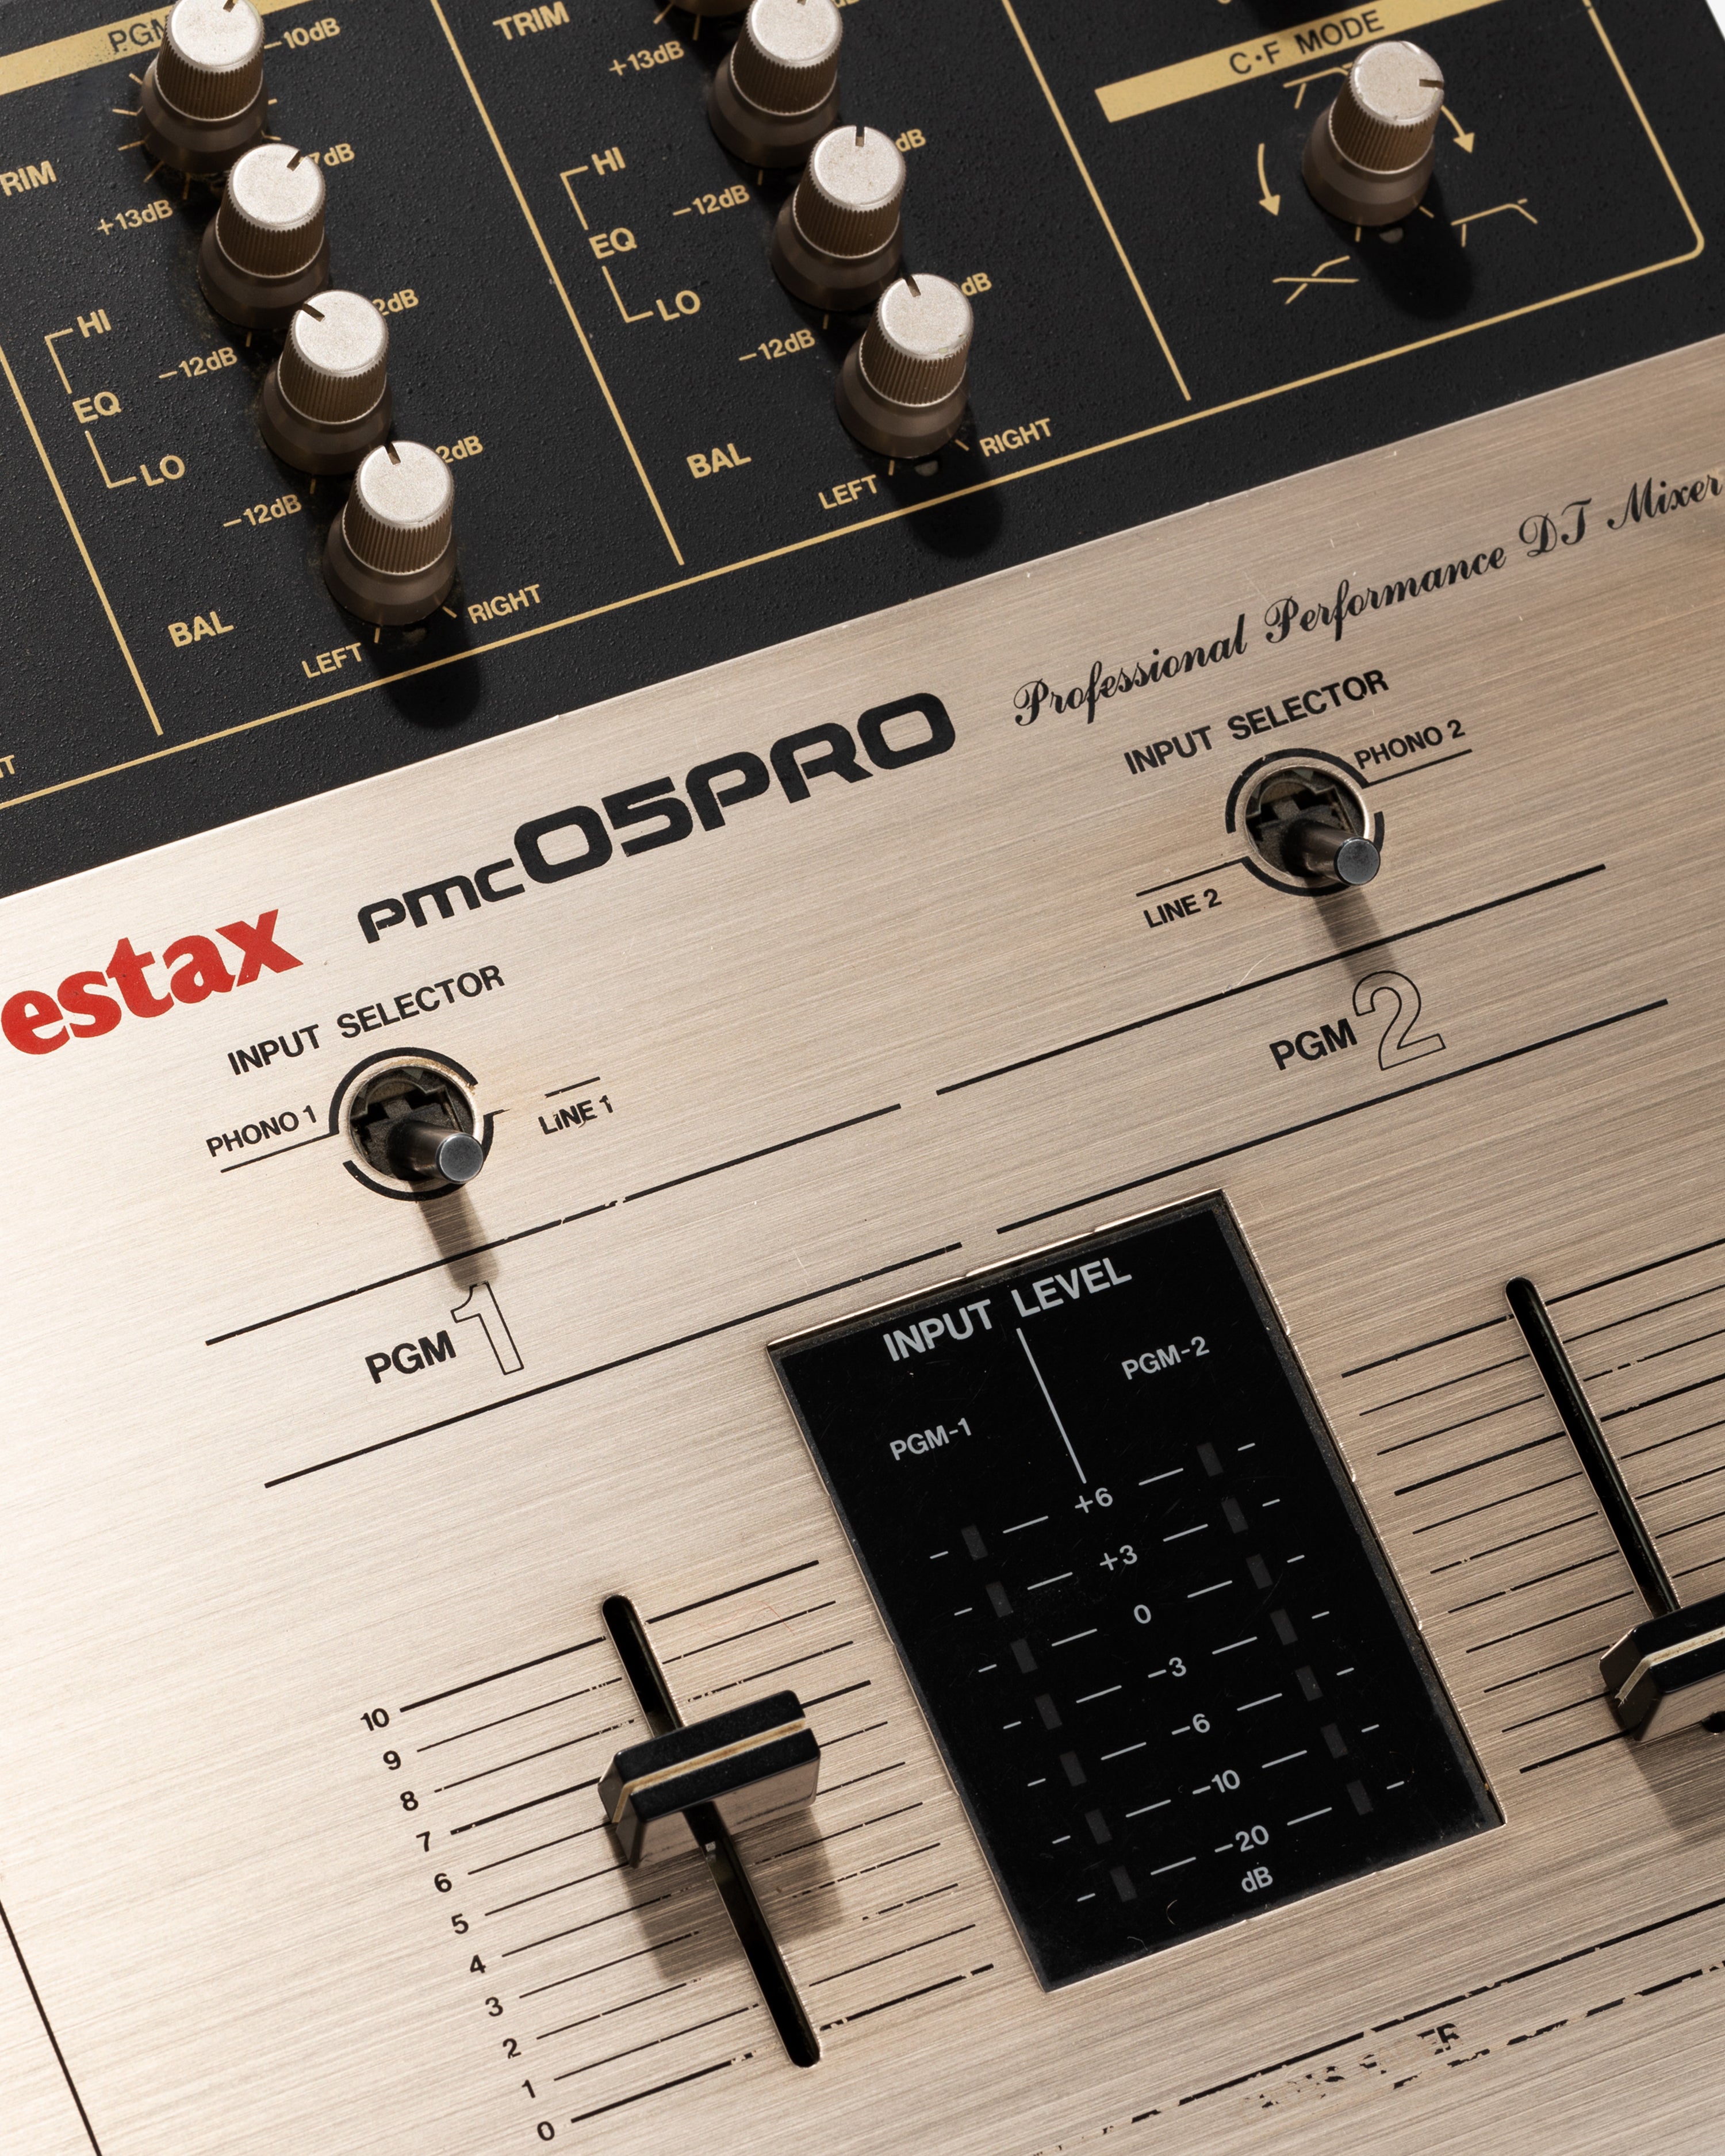 Vintage Vestax PMC 05 Pro Mixer